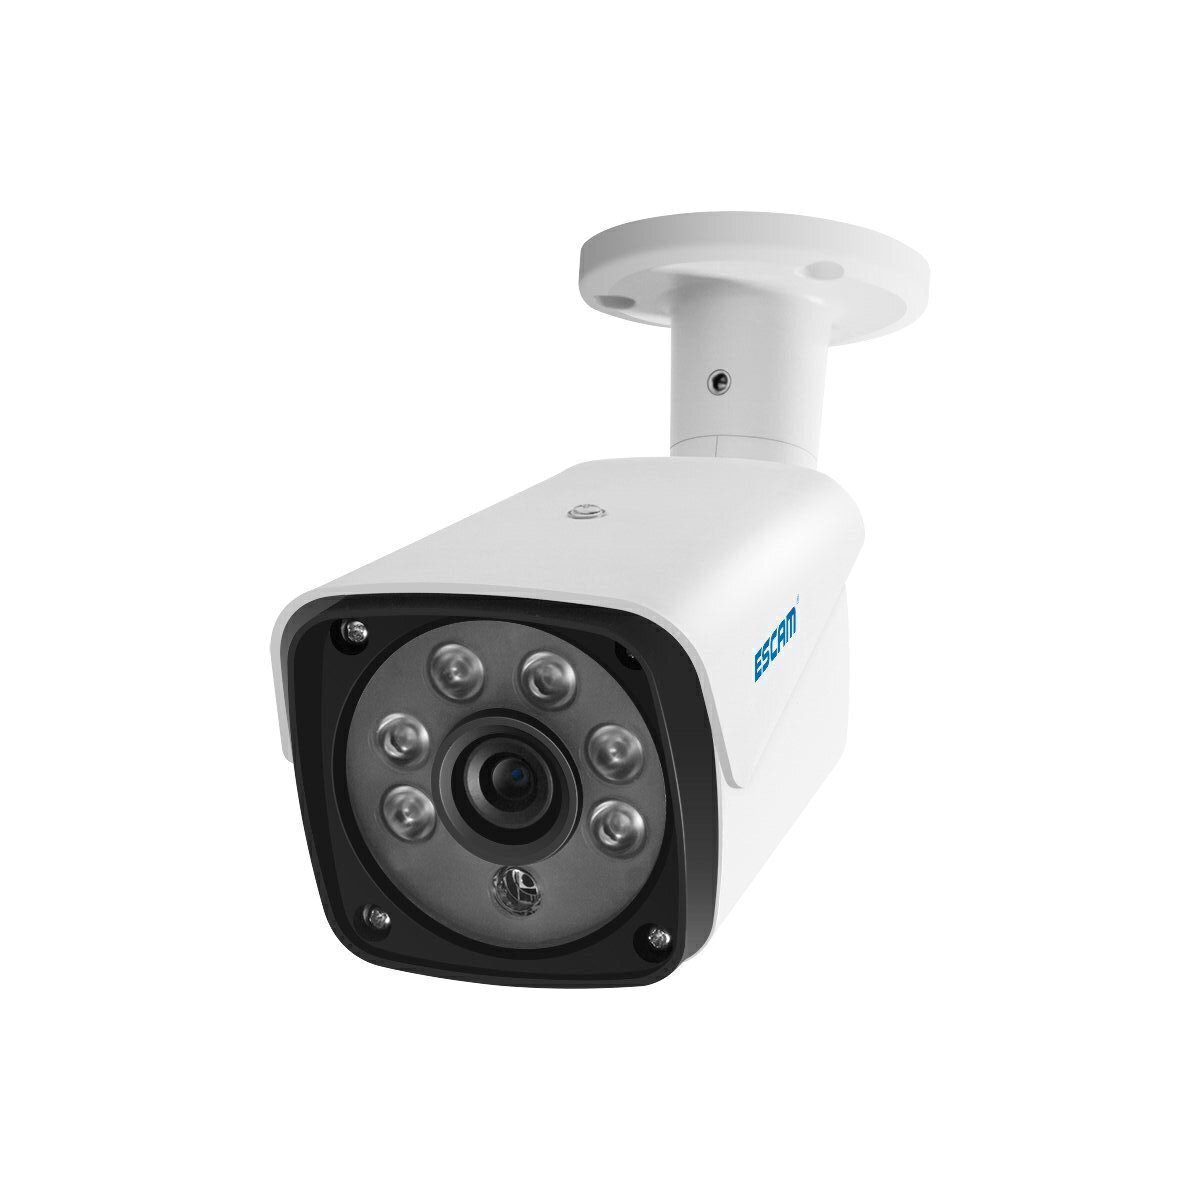 ESCAM QH002 HD 1080P IP Camera ONVIF H.265 P2P Outdoor Waterproof IR Bullet with Smart Analysis Function Surveillance Security Camera 124